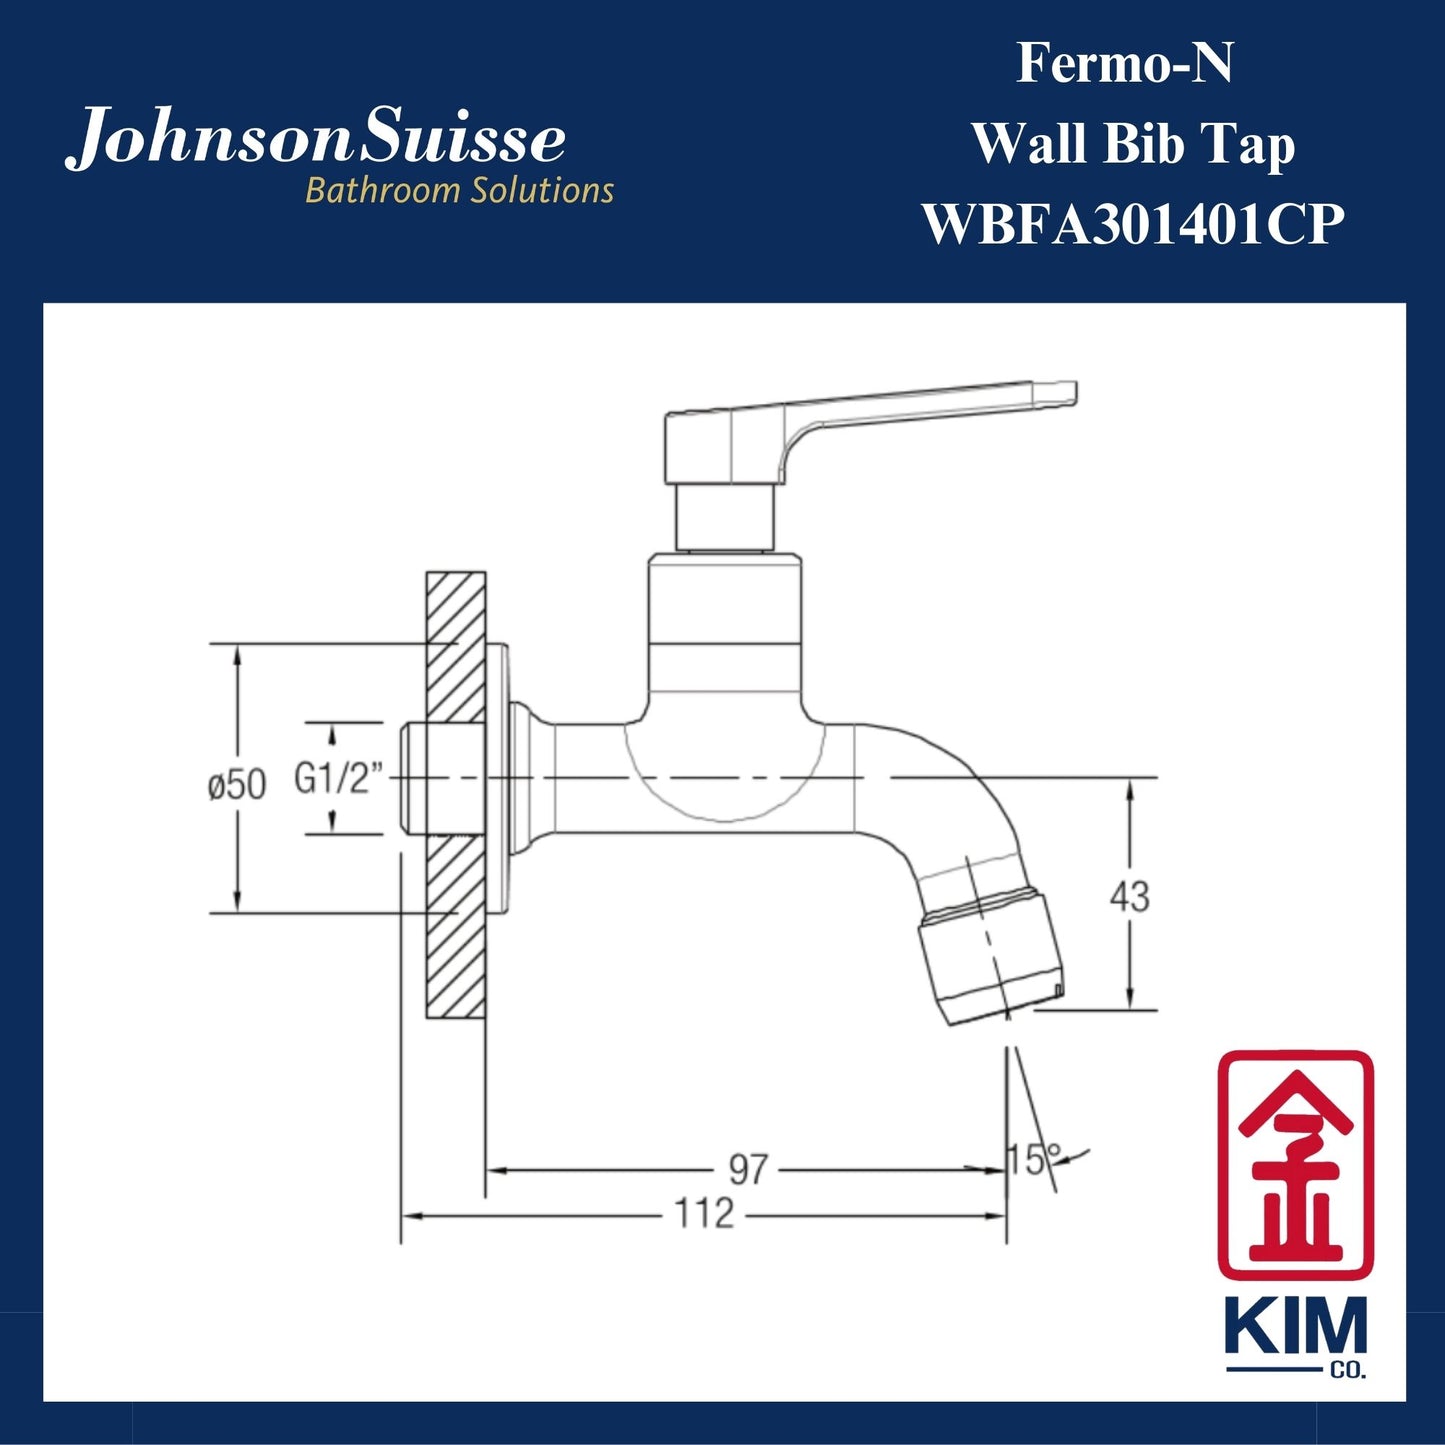 Johnson Suisse Fermo-N Wall Bib Tap (WBFA301401CP)